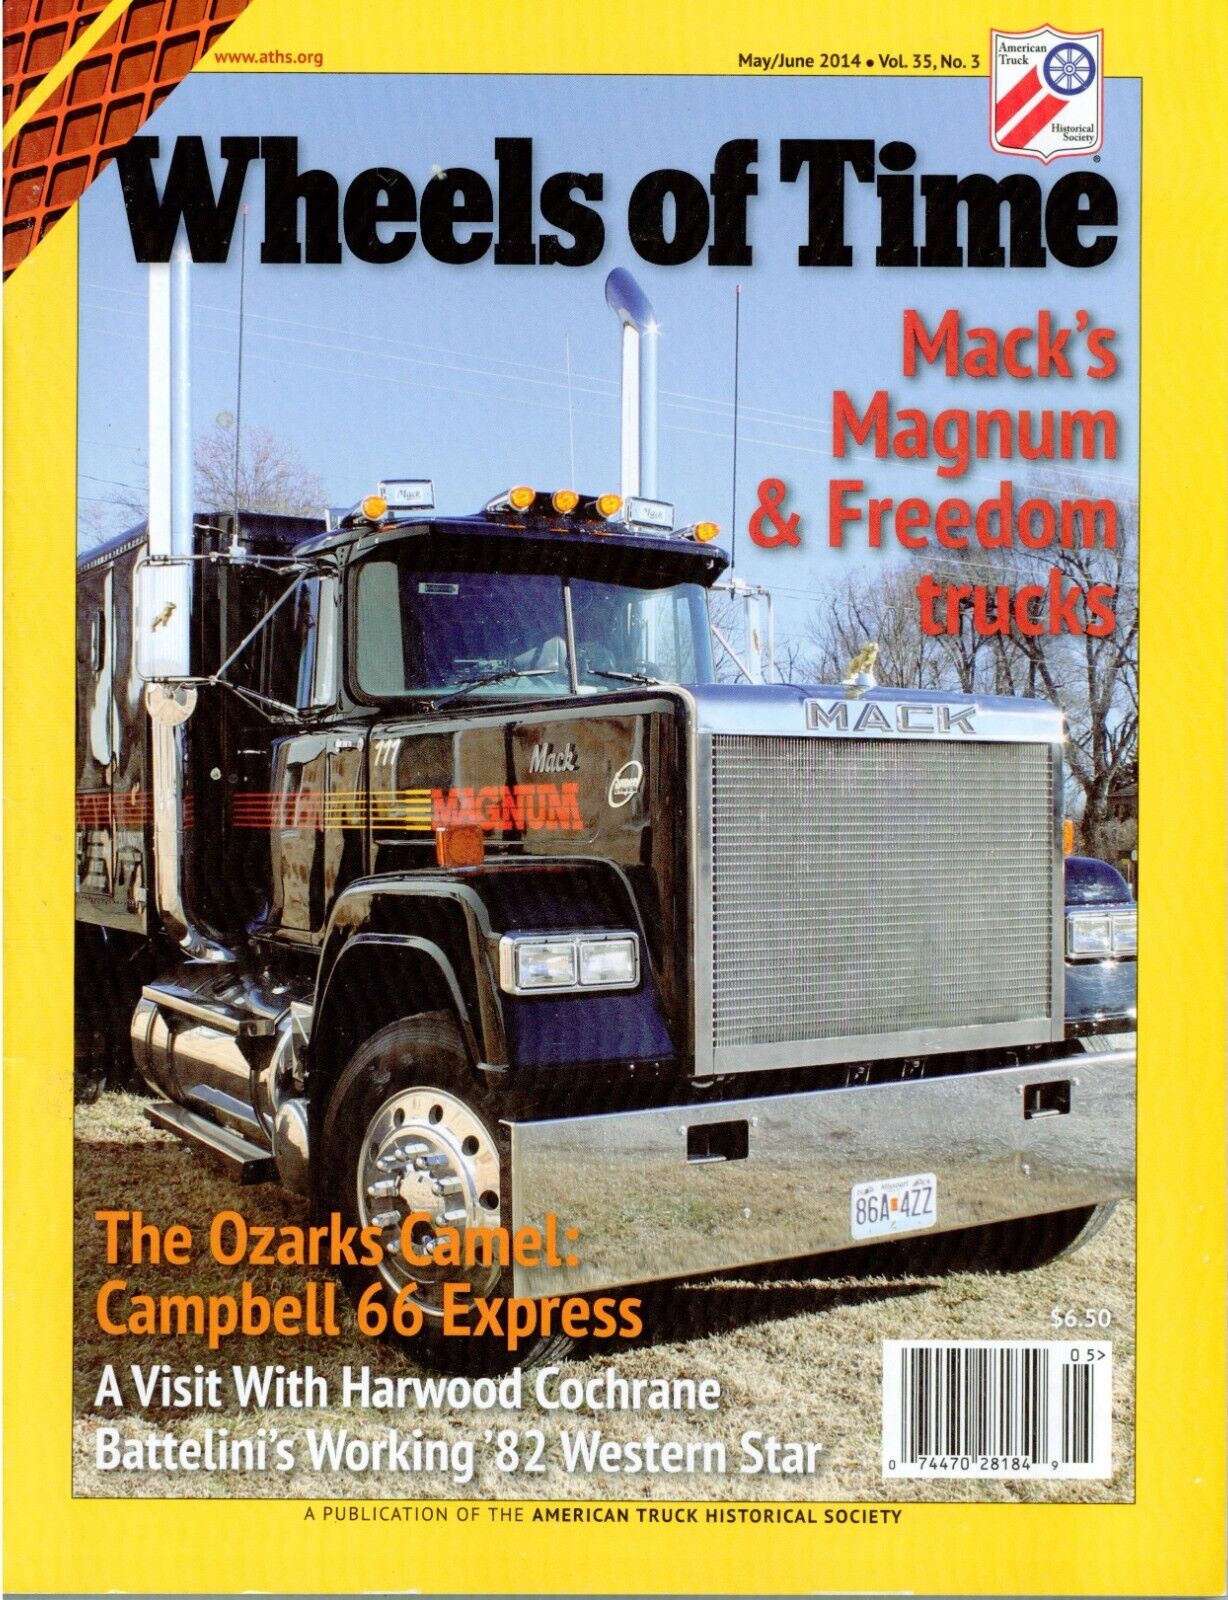 Mack Magnum & Freedom Trucks, Campbell Express, Overnight Transportation